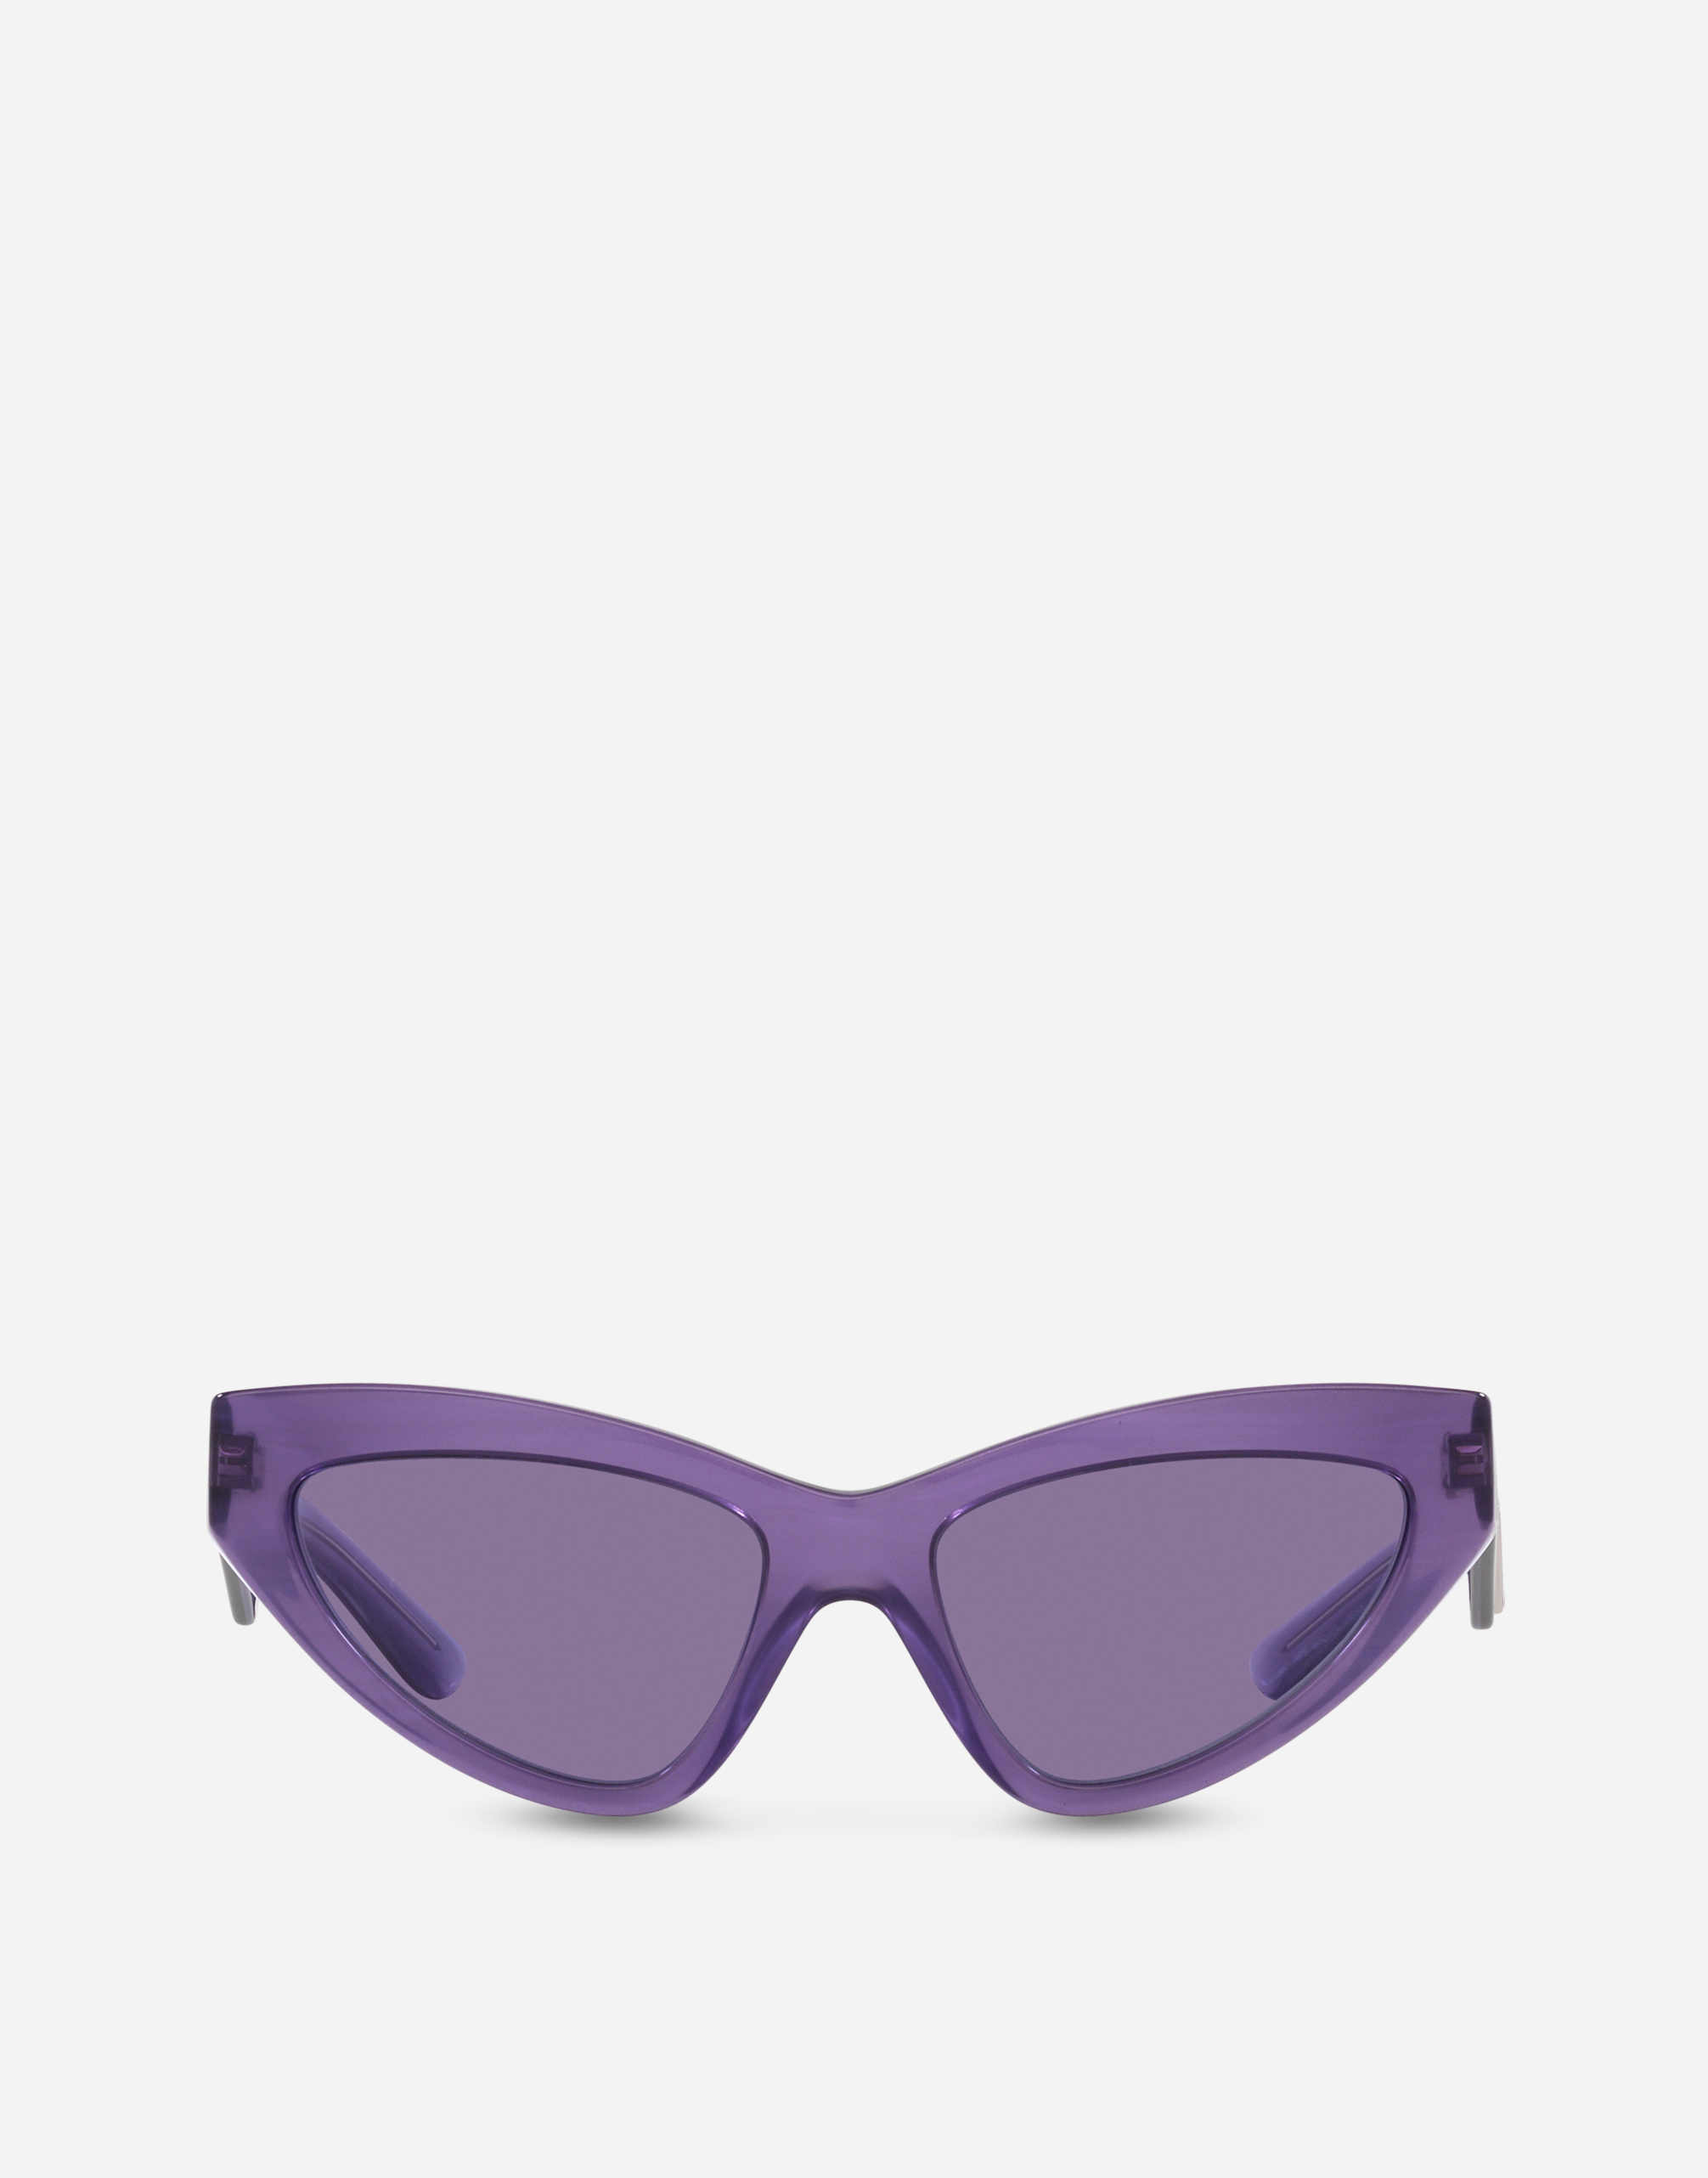 DG Crossed Sunglasses in Fleur purple